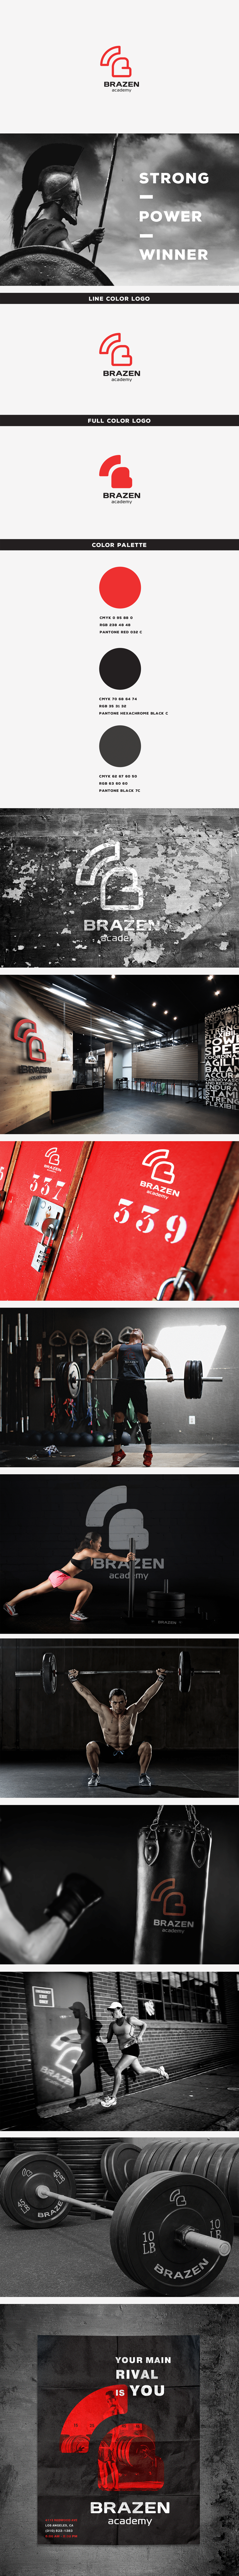 Crossfit sport gym strong Spartan red black hard logo mark brand Boxing